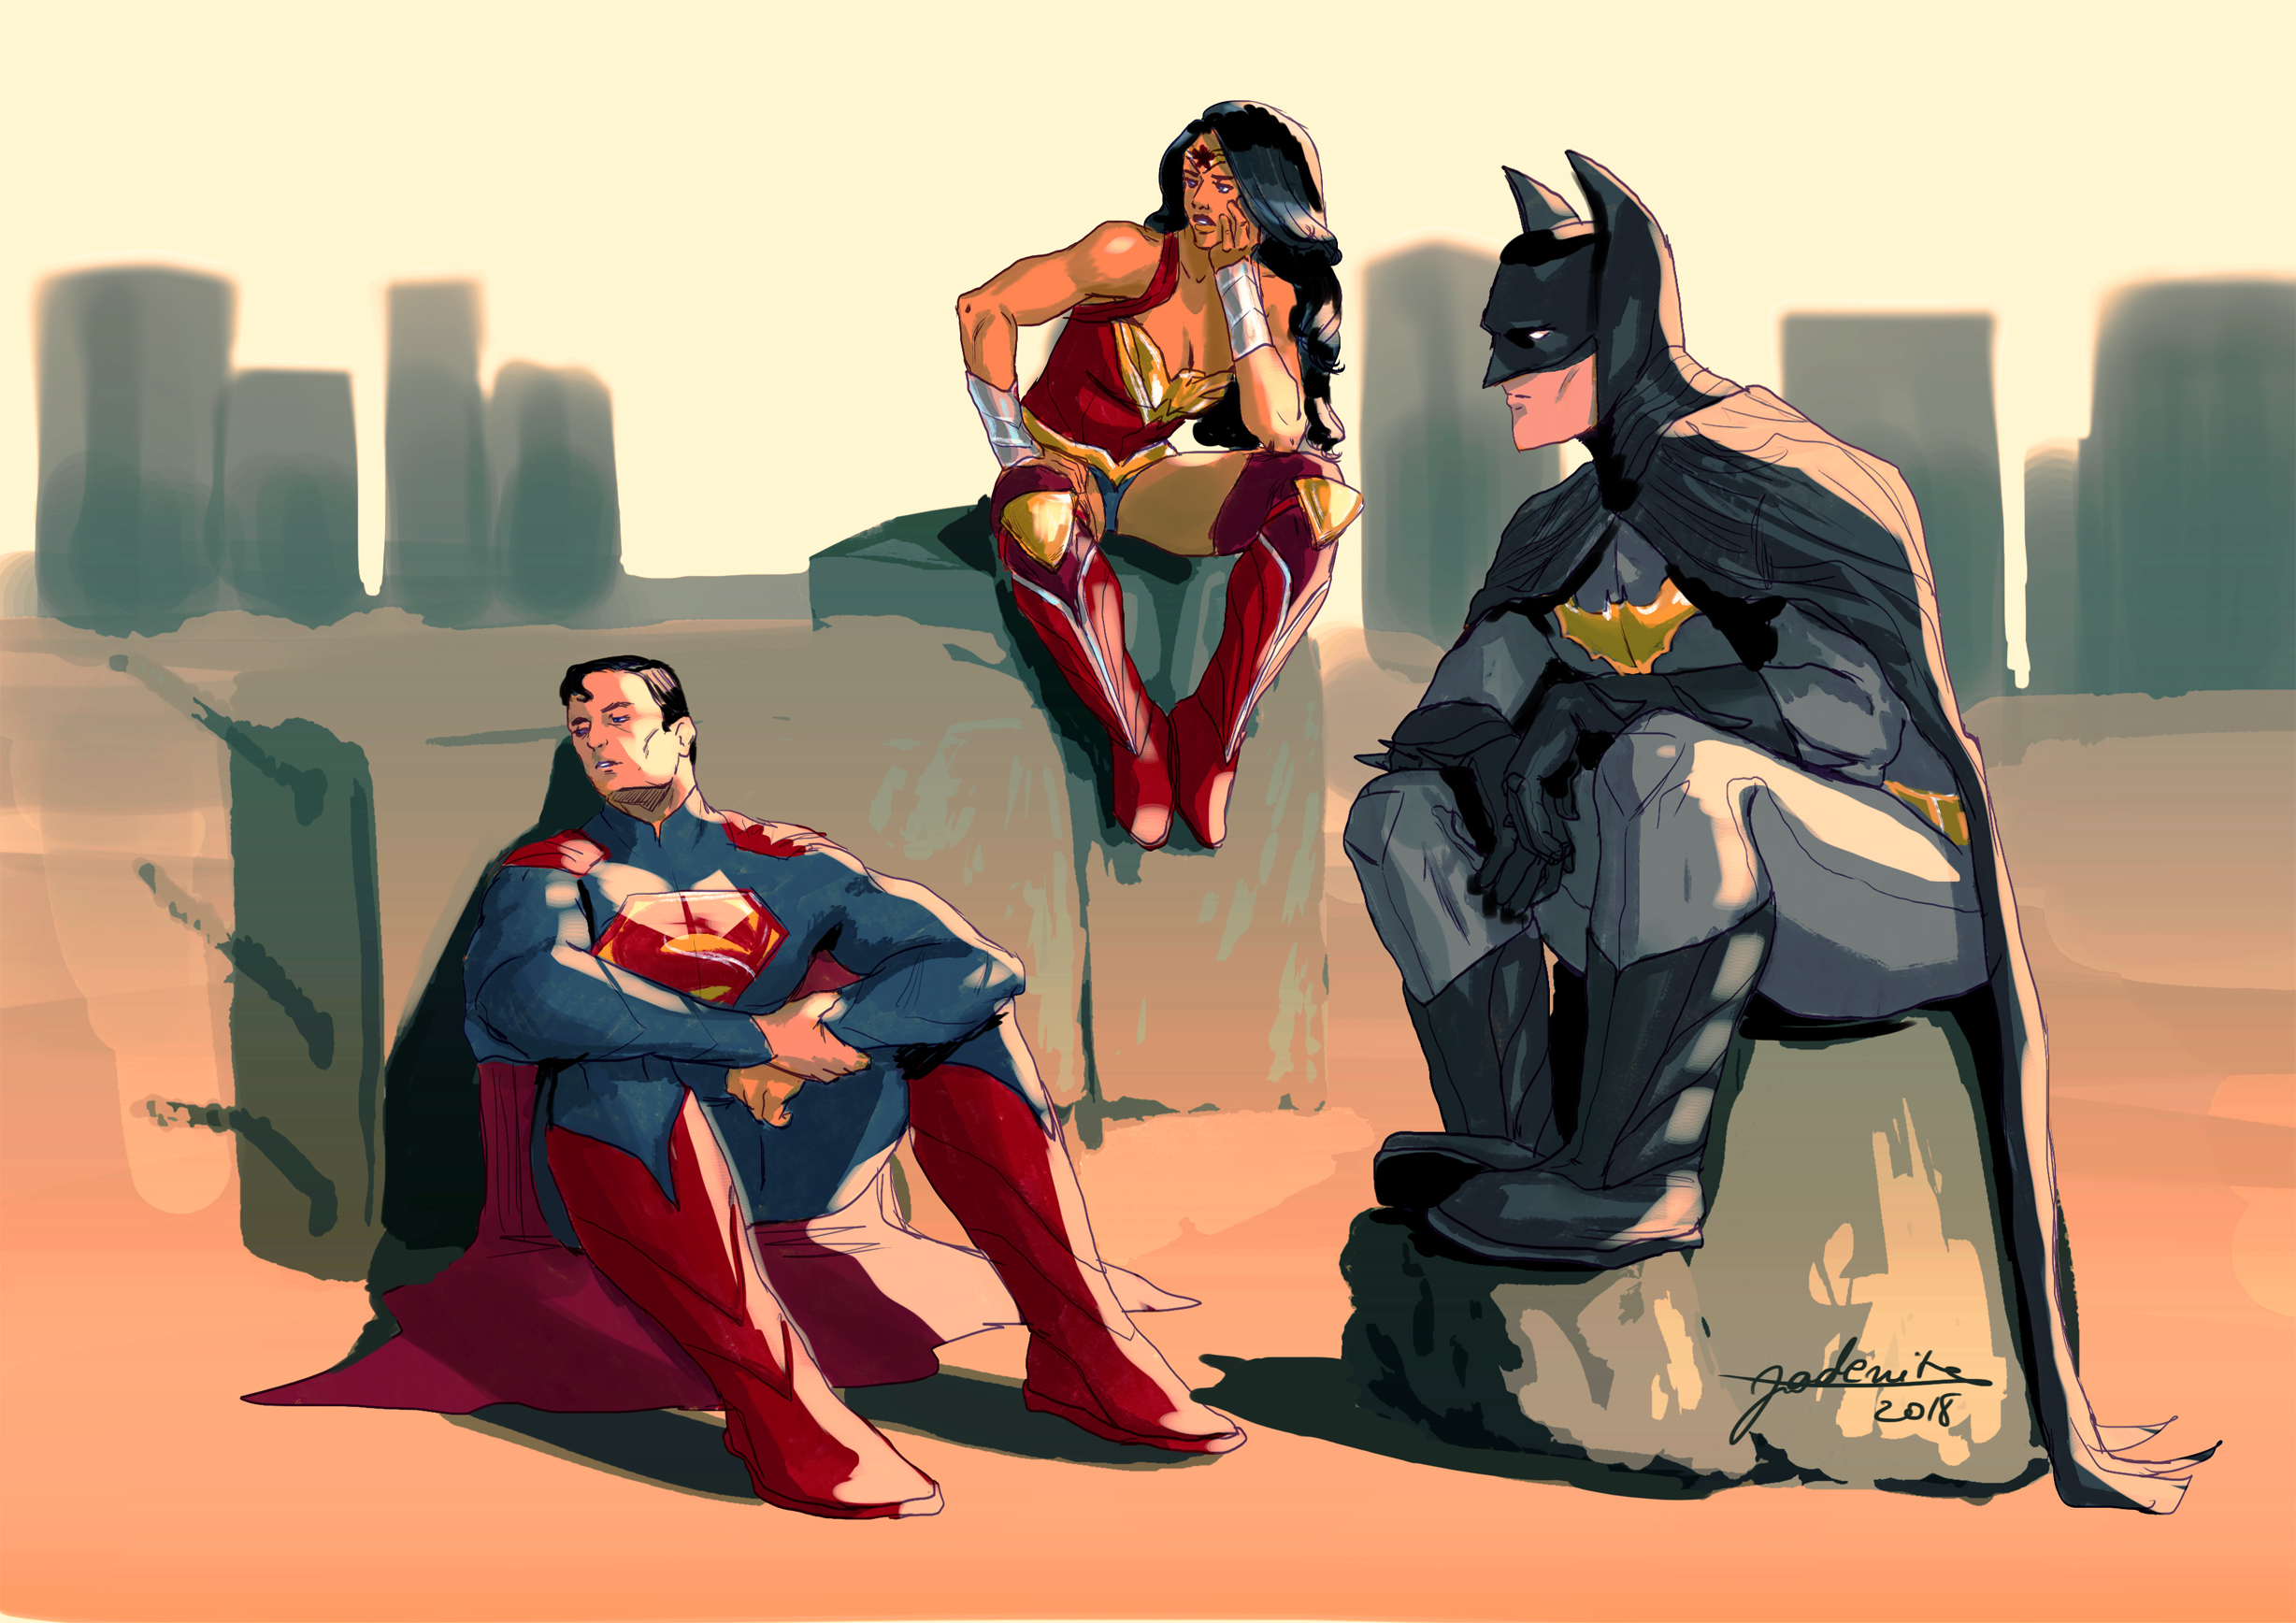 Cockham superheroes. Бэтмен и Супермен. Супермен лига справедливости. Лига справедливости Бэтмен и Супермен. DC Бэтмен Супермен чудо женщина.